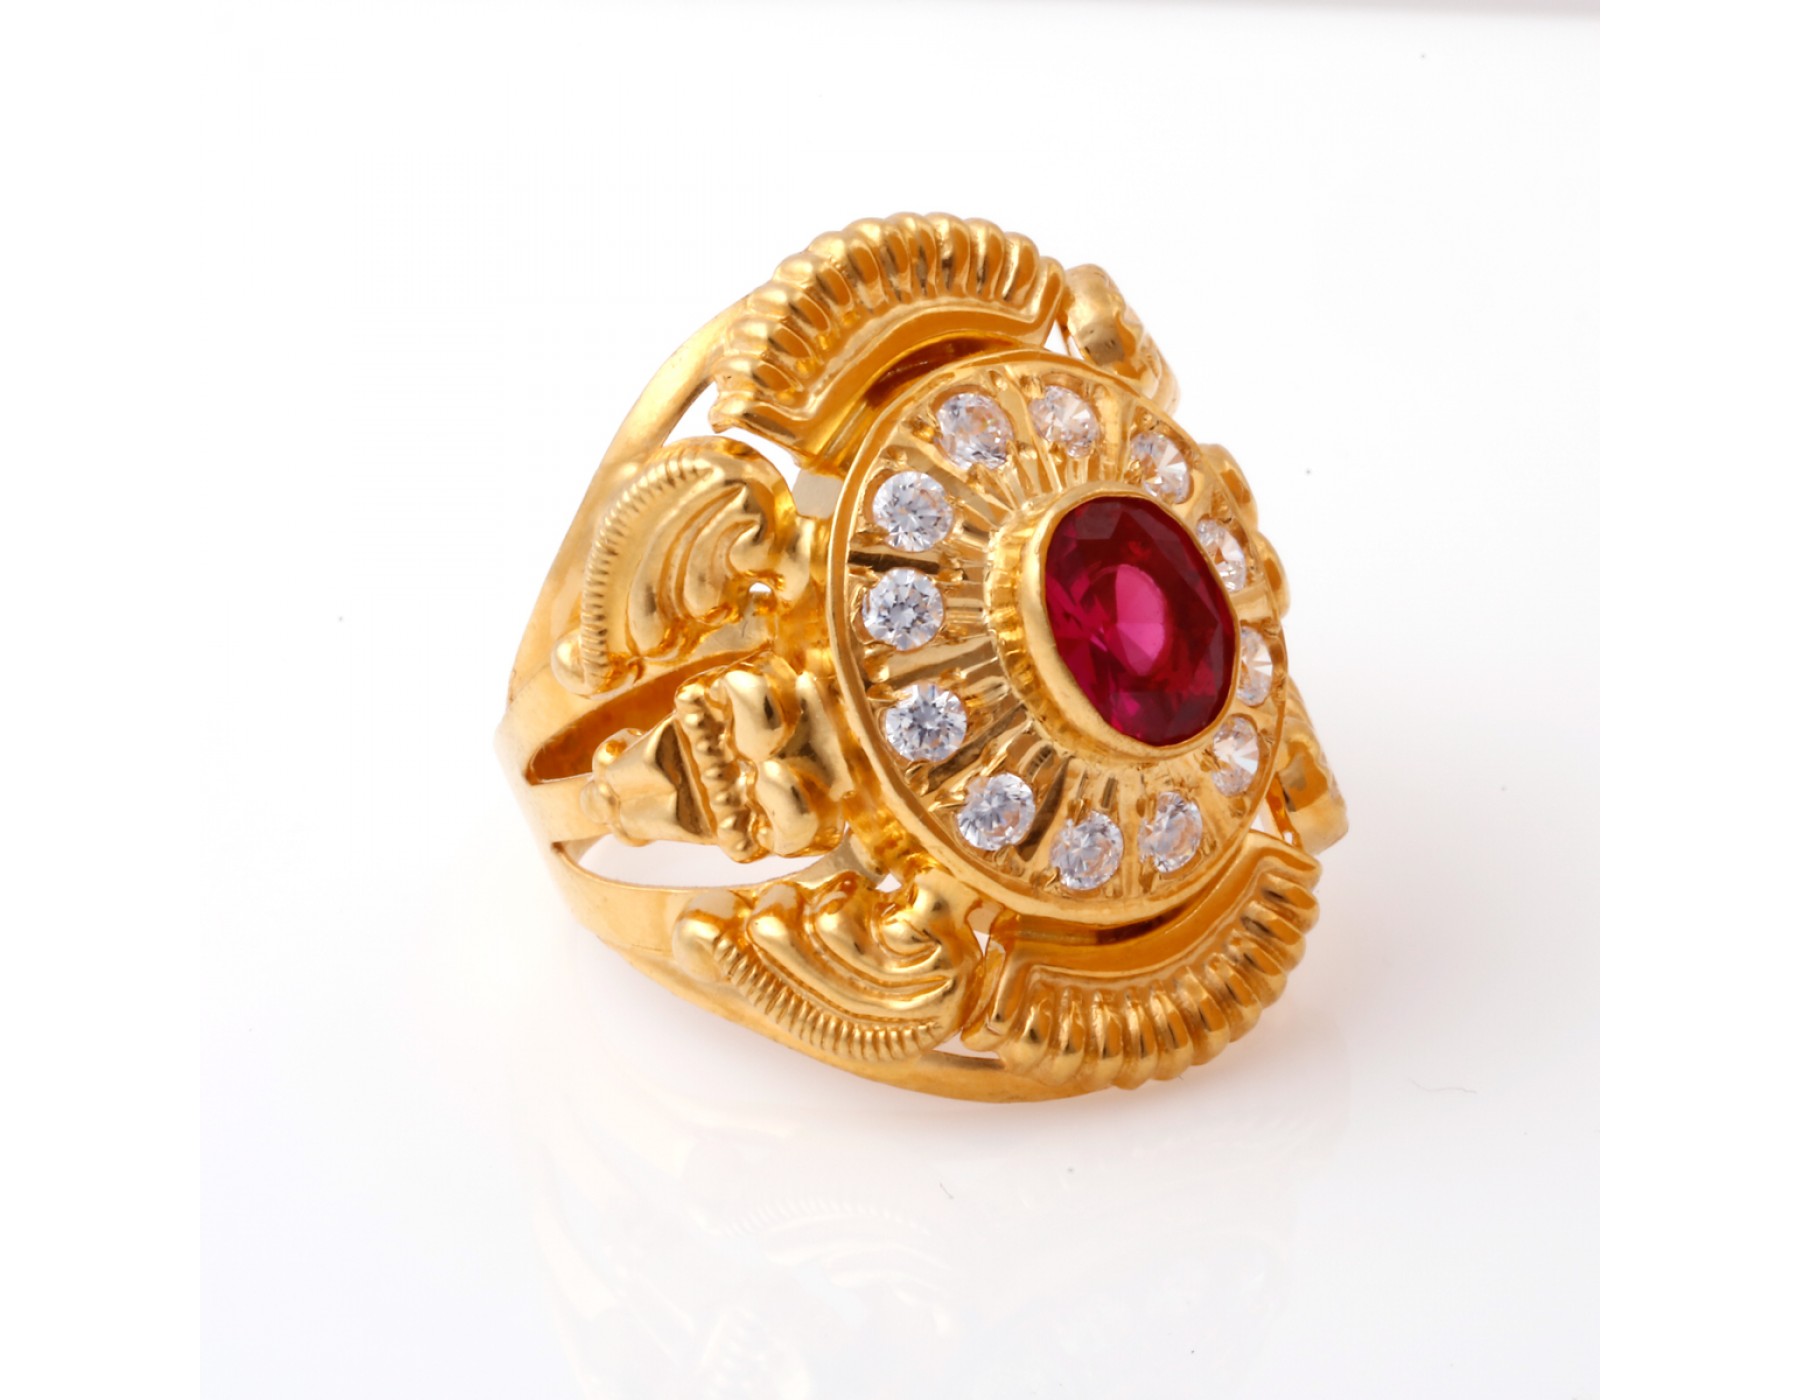 Maharaja finger ring latur special - Gold jewellery lovers | Facebook